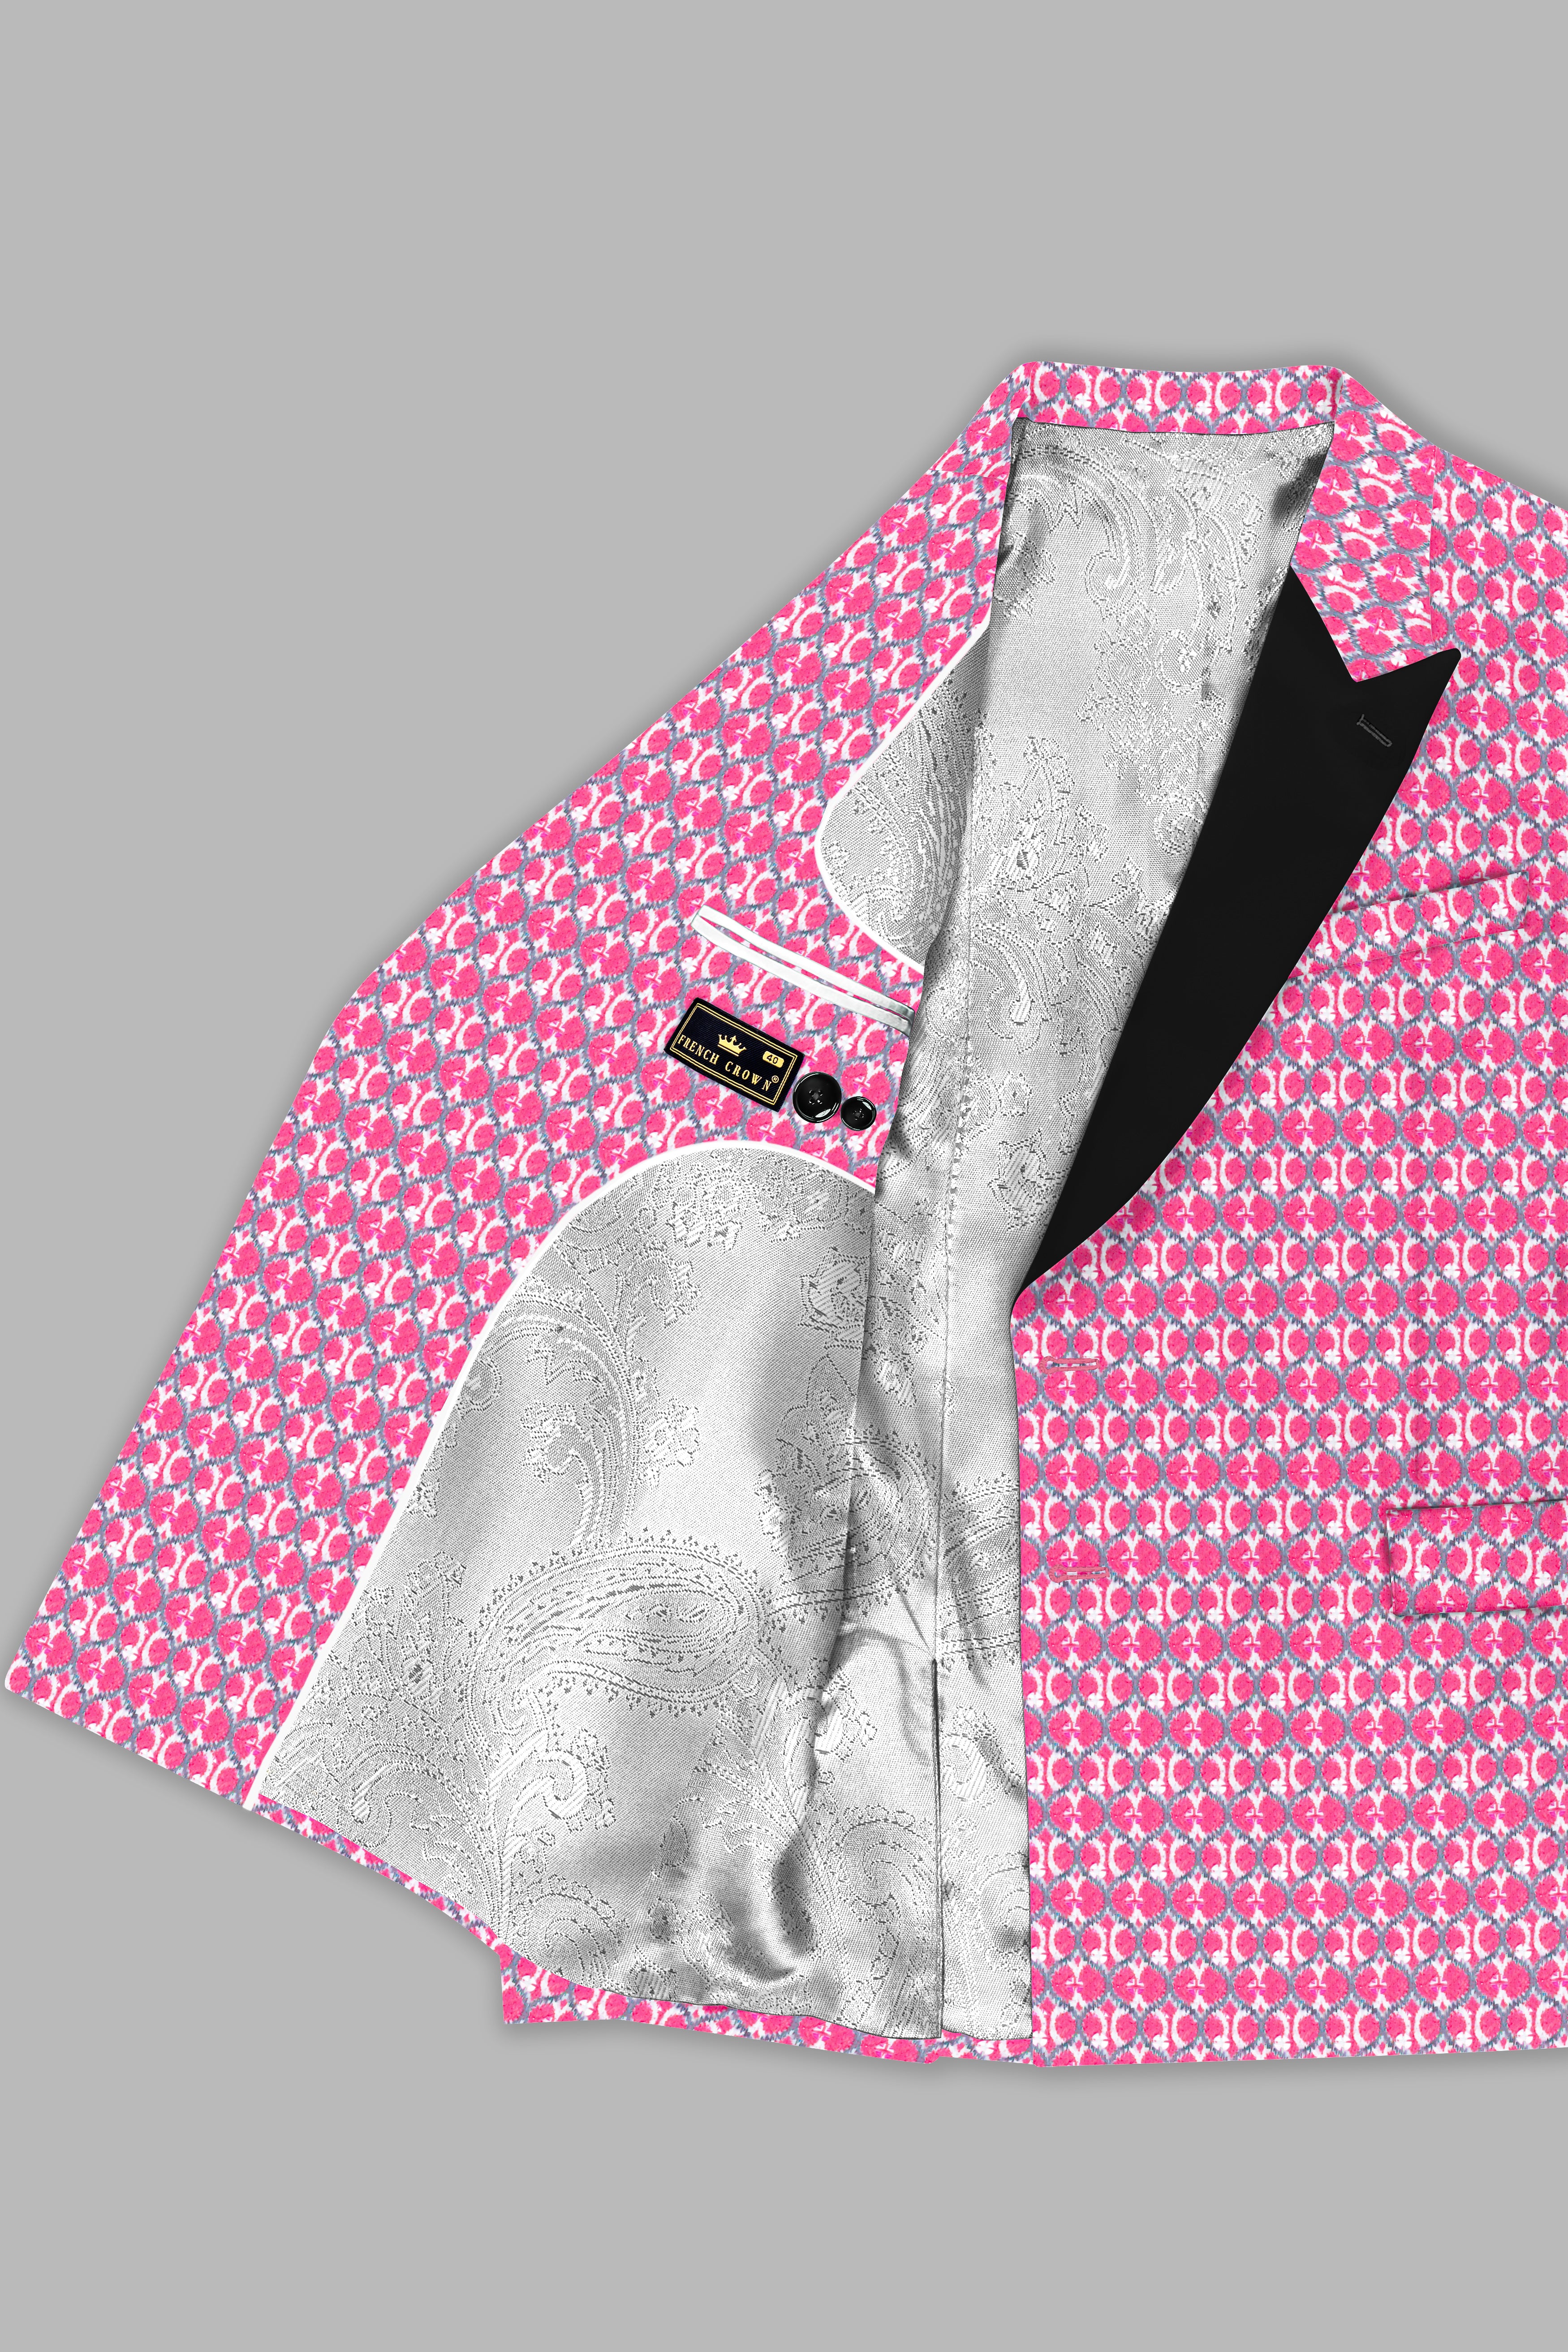 French Rose Pink and Bright White Designer Embroidered Peak Collar Tuxedo Blazer